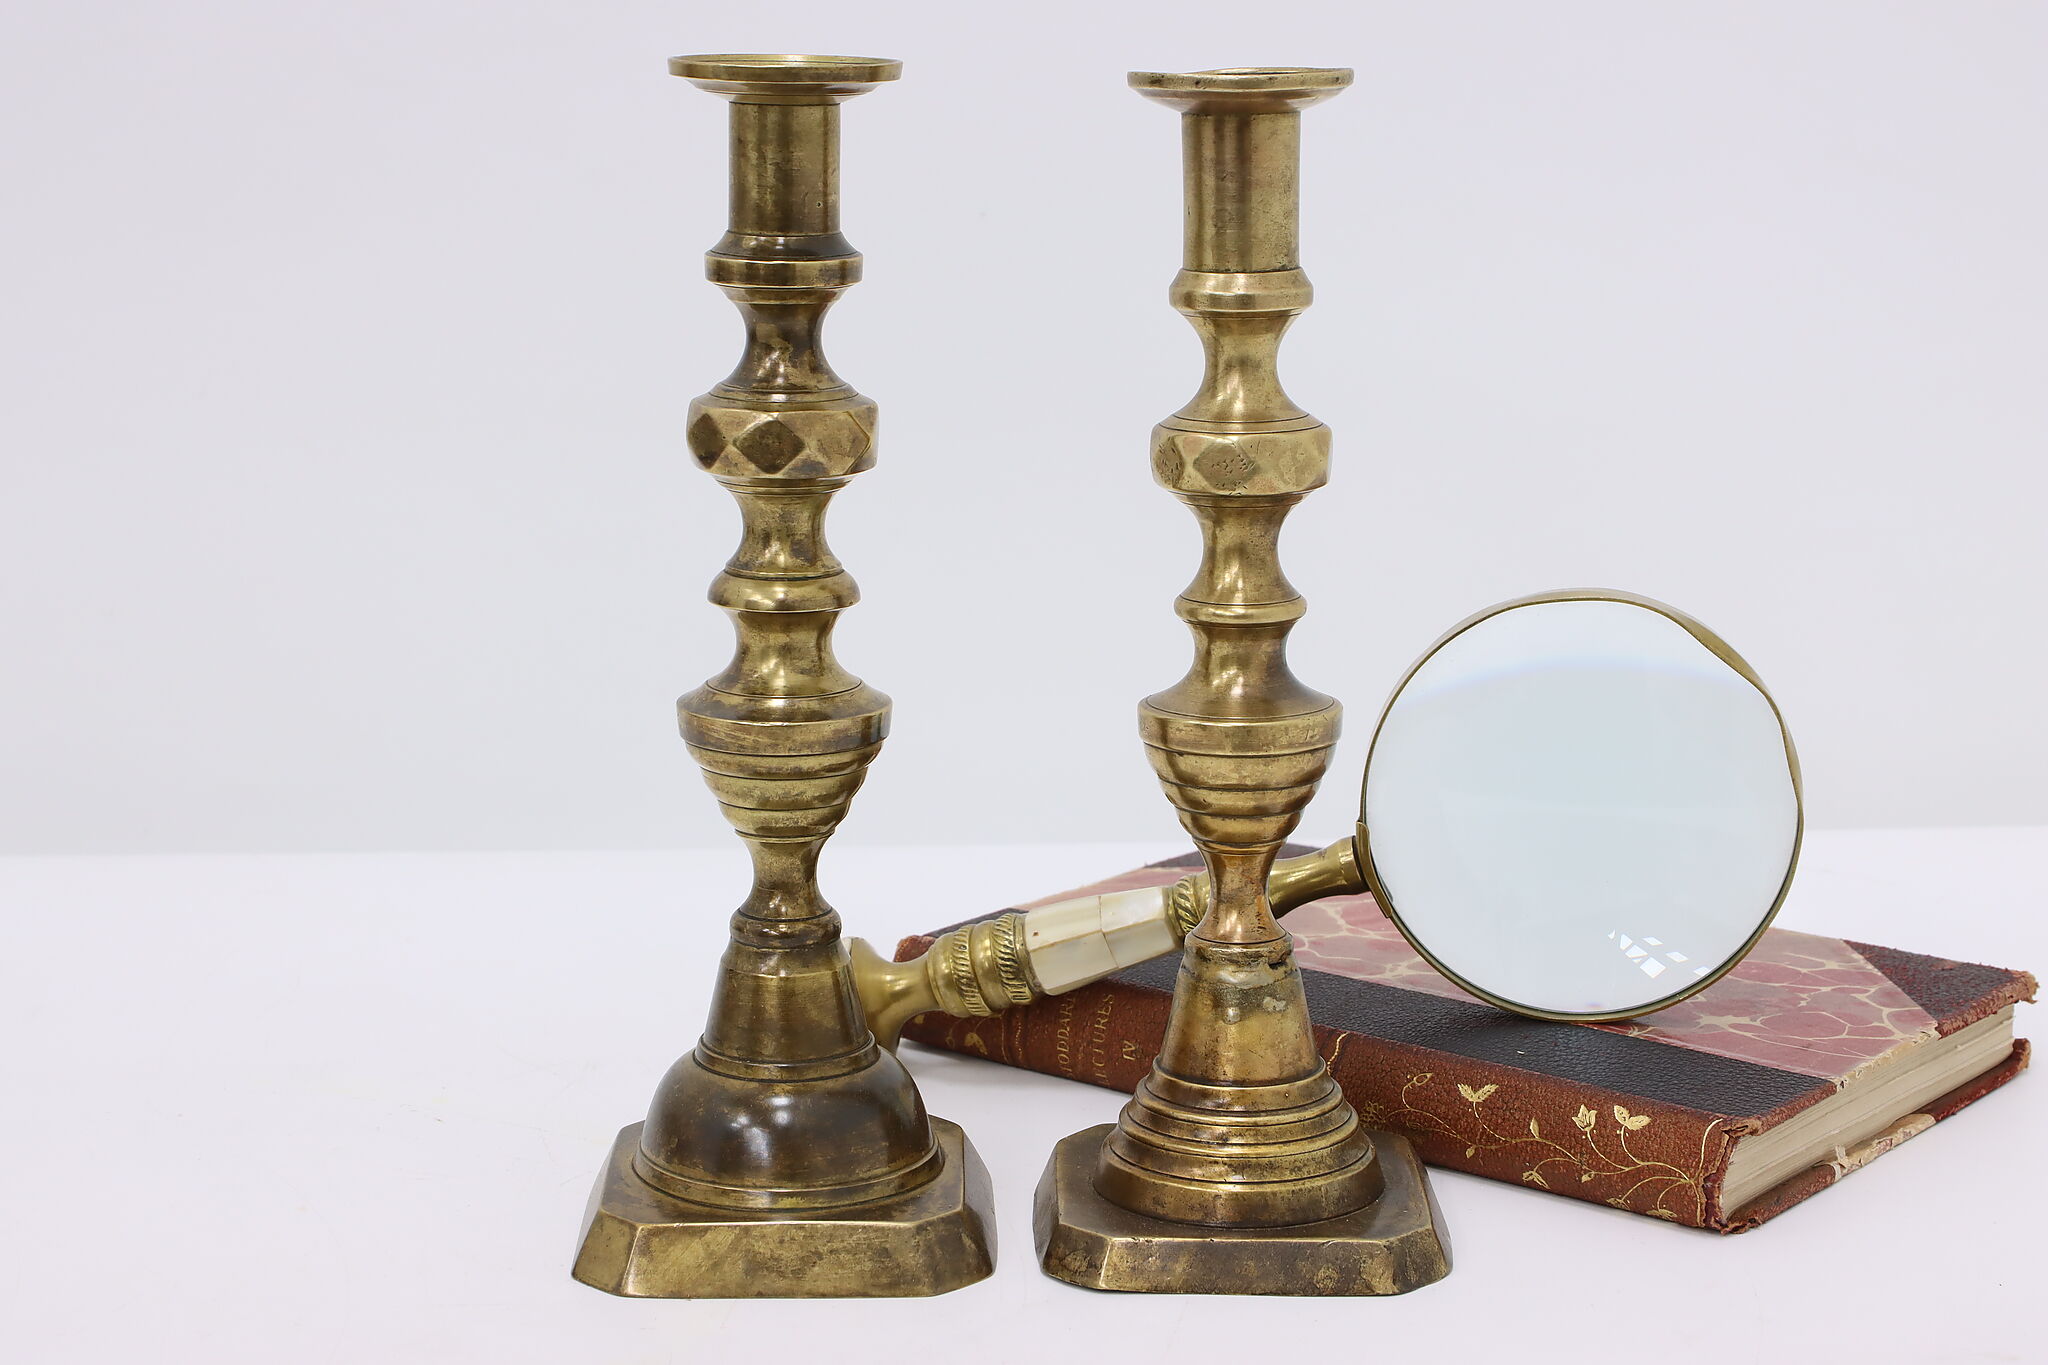 Pair of Antique English Brass Candlesticks |English Antiques - Caledonian,  Inc. Barrington, Il - 60010 (847) 381-0569